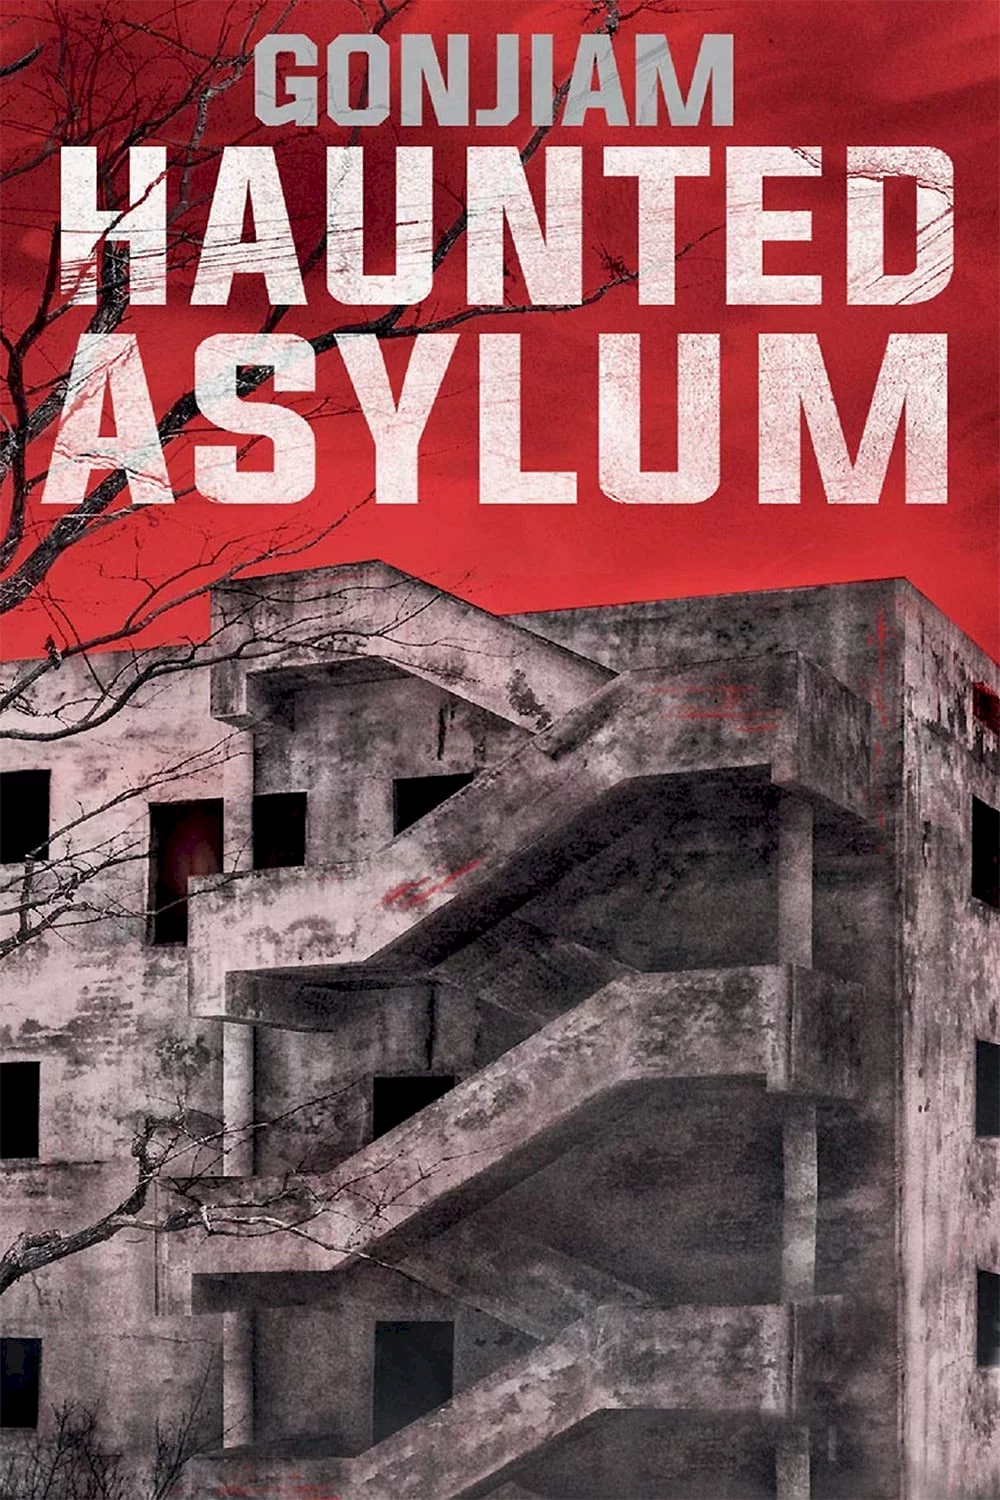 Photo du film : Gonjiam : Haunted Asylum